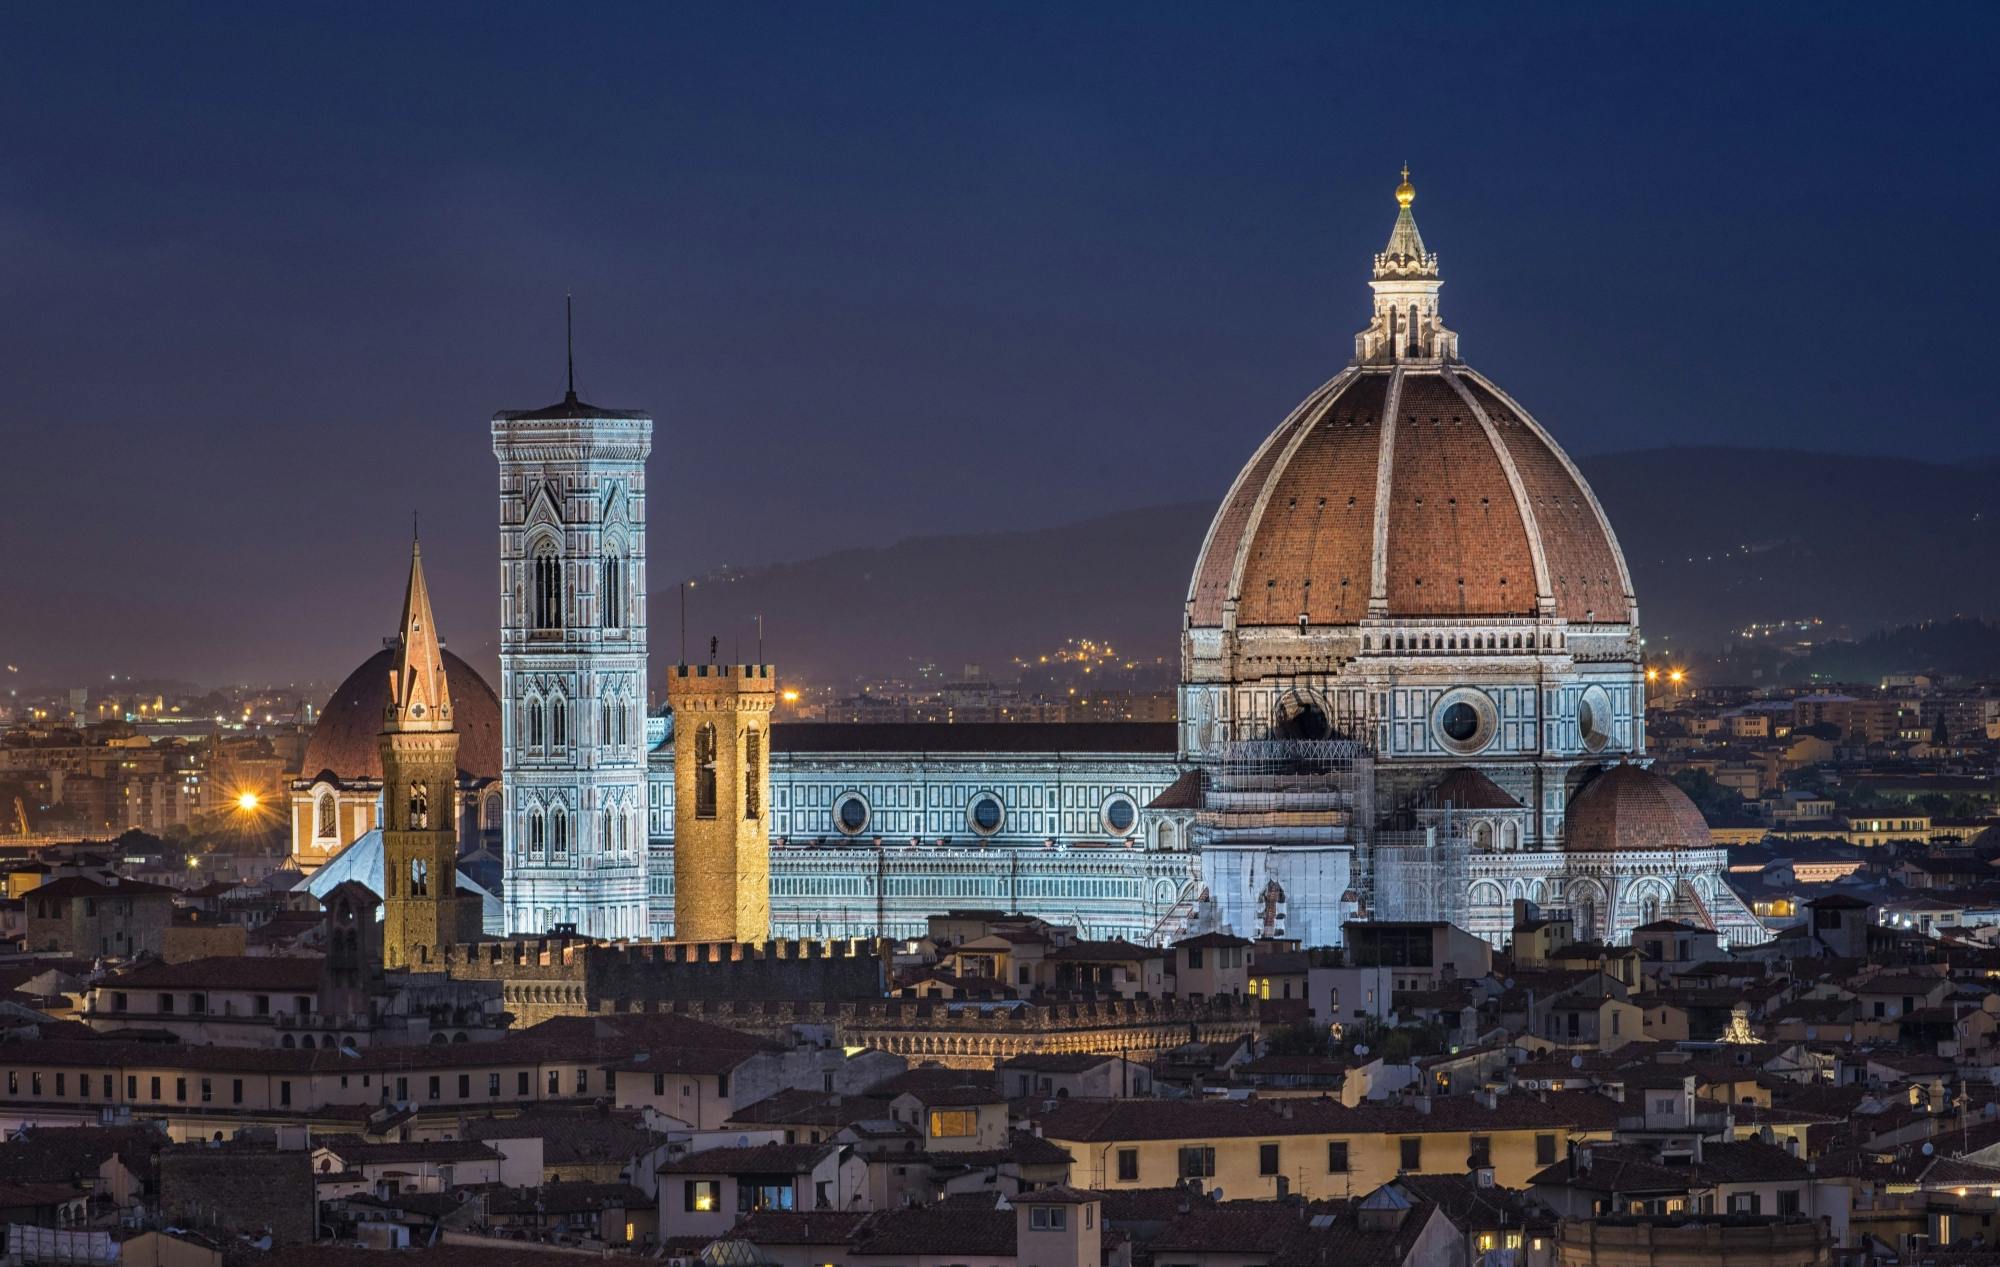 "Michelangelo's Florence" online exploration game Musement